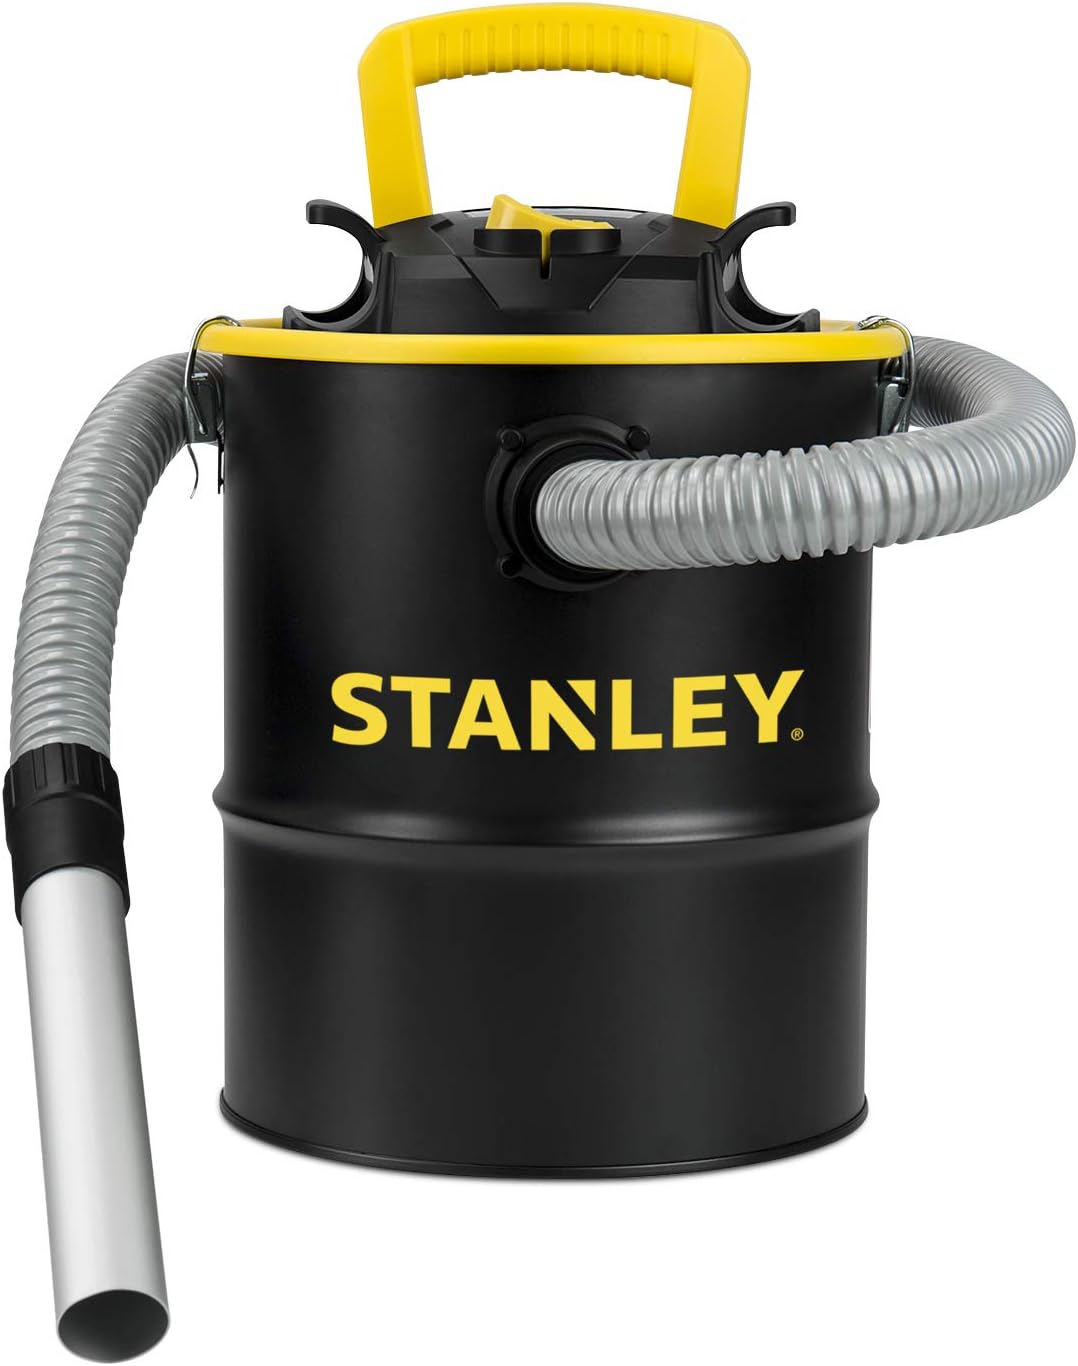 Stanley Ash Vacuum 4Gallon 4HP SL-18184, 4 Gallon, Black